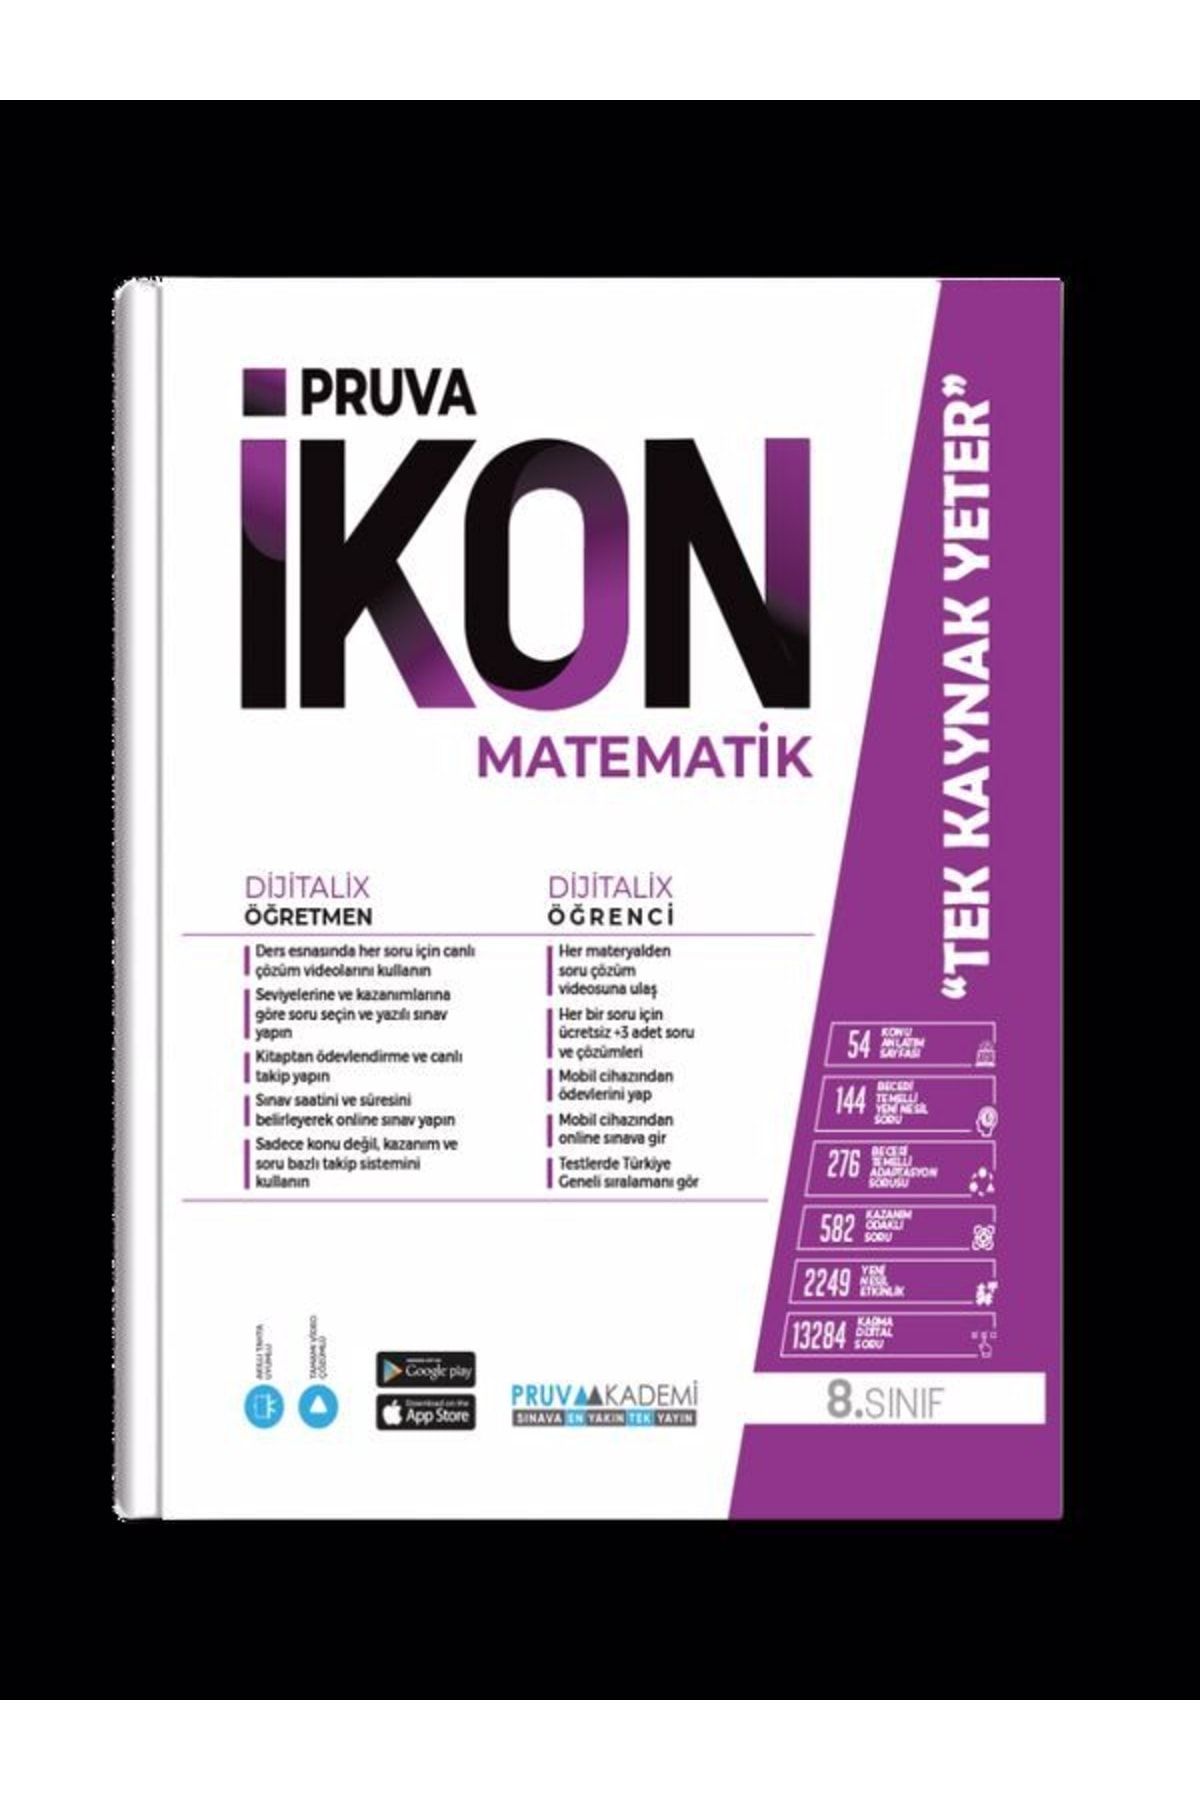 Pruva Akademi 8. Sınıf Pruva Ikon Matematik Konu Anlatım Kitabı